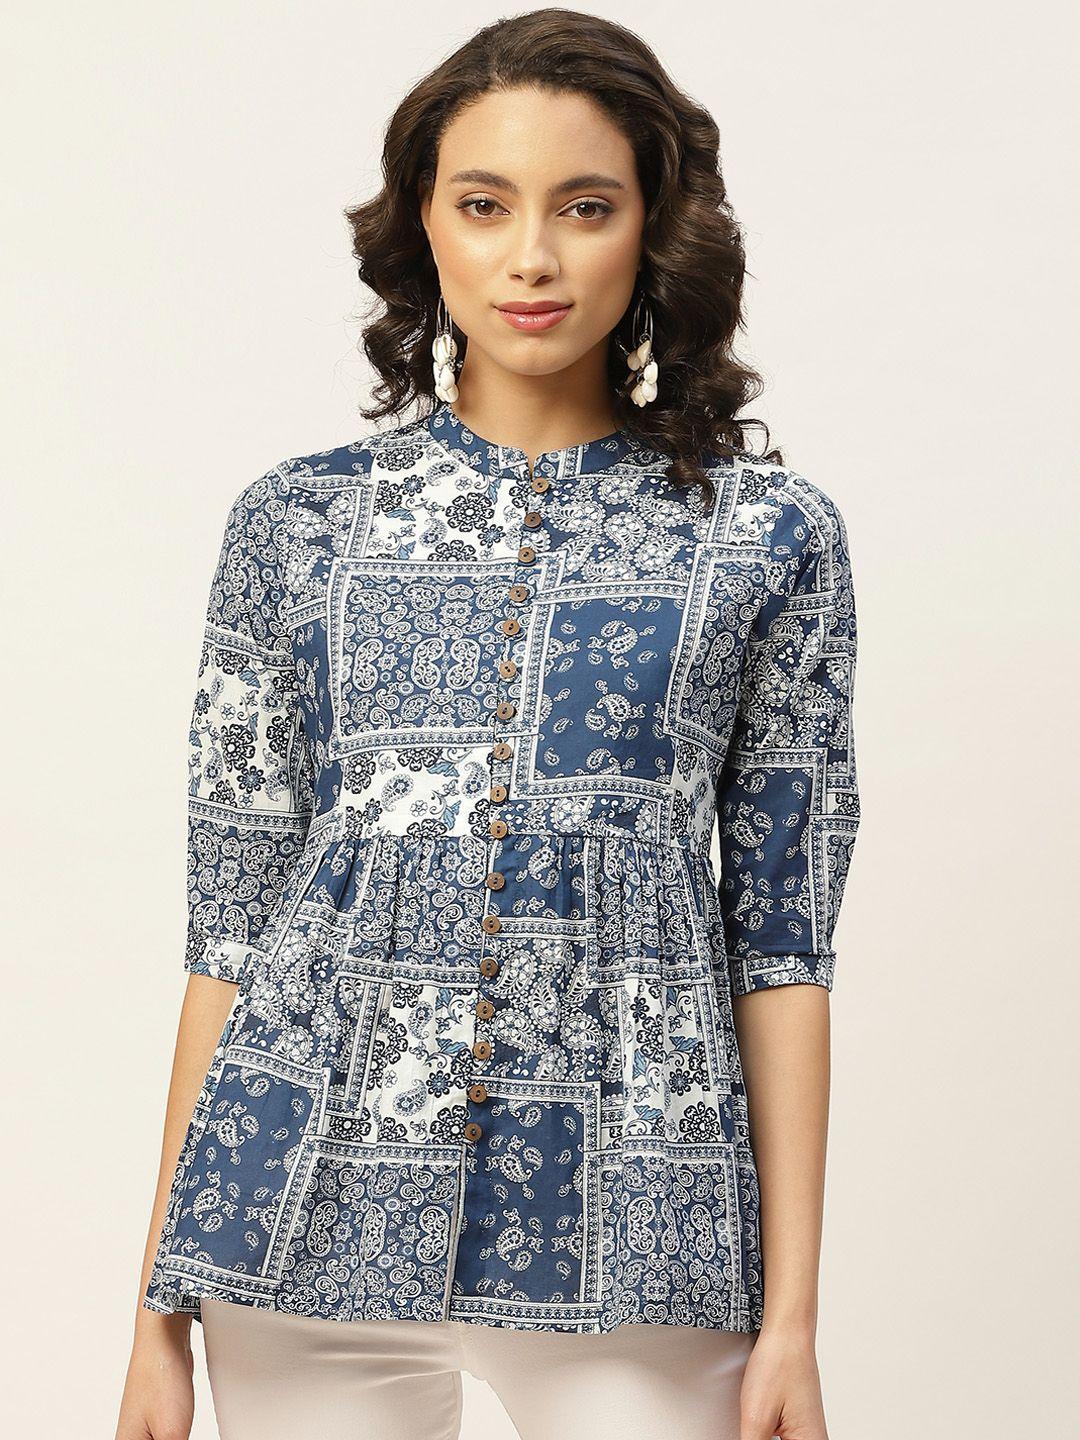 shae by sassafras women navy blue & white printed pure cotton mandarin collar a-line top